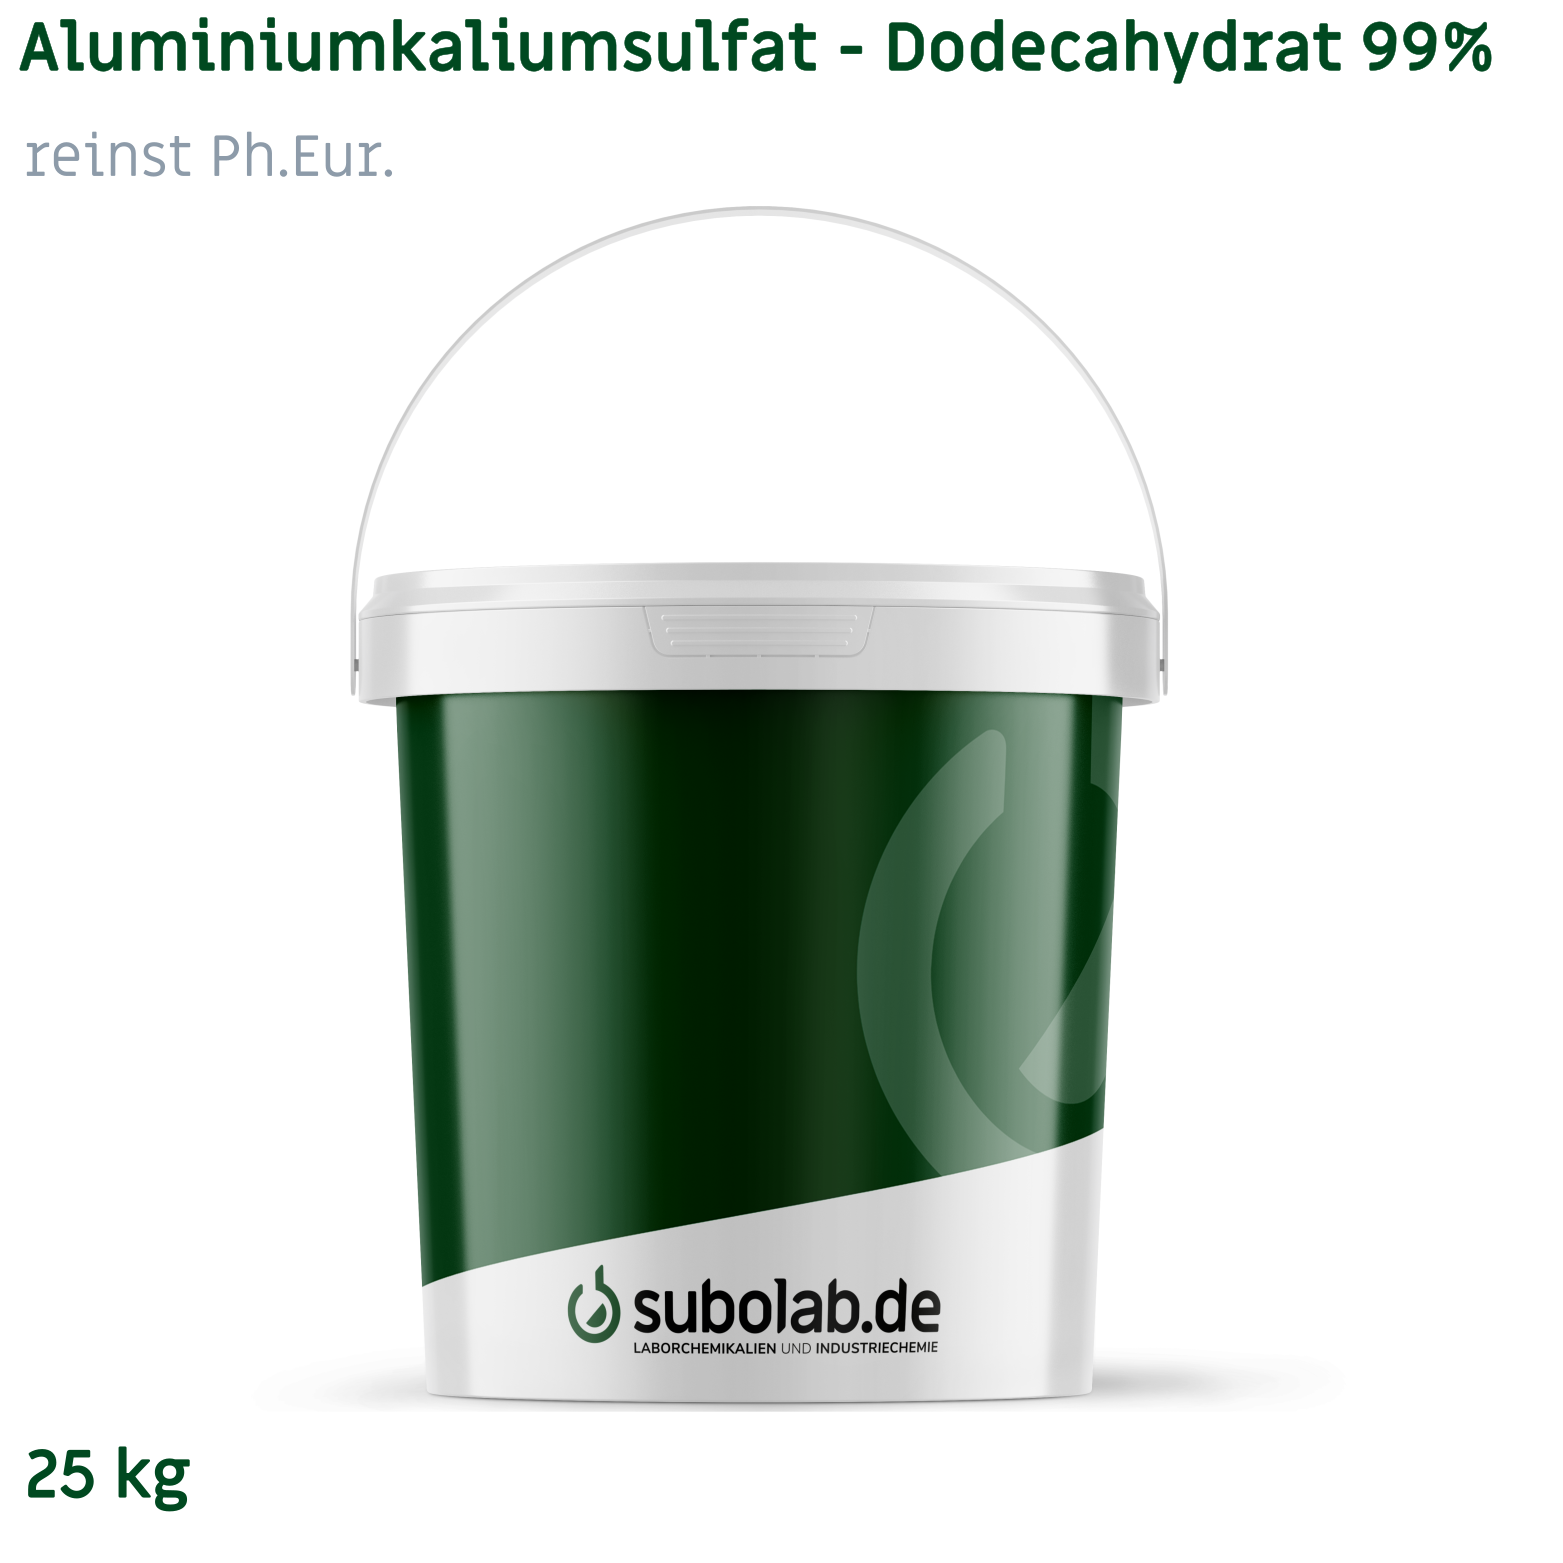 Bild von Aluminiumkaliumsulfat - Dodecahydrat 99% reinst Ph.Eur. (25 kg)